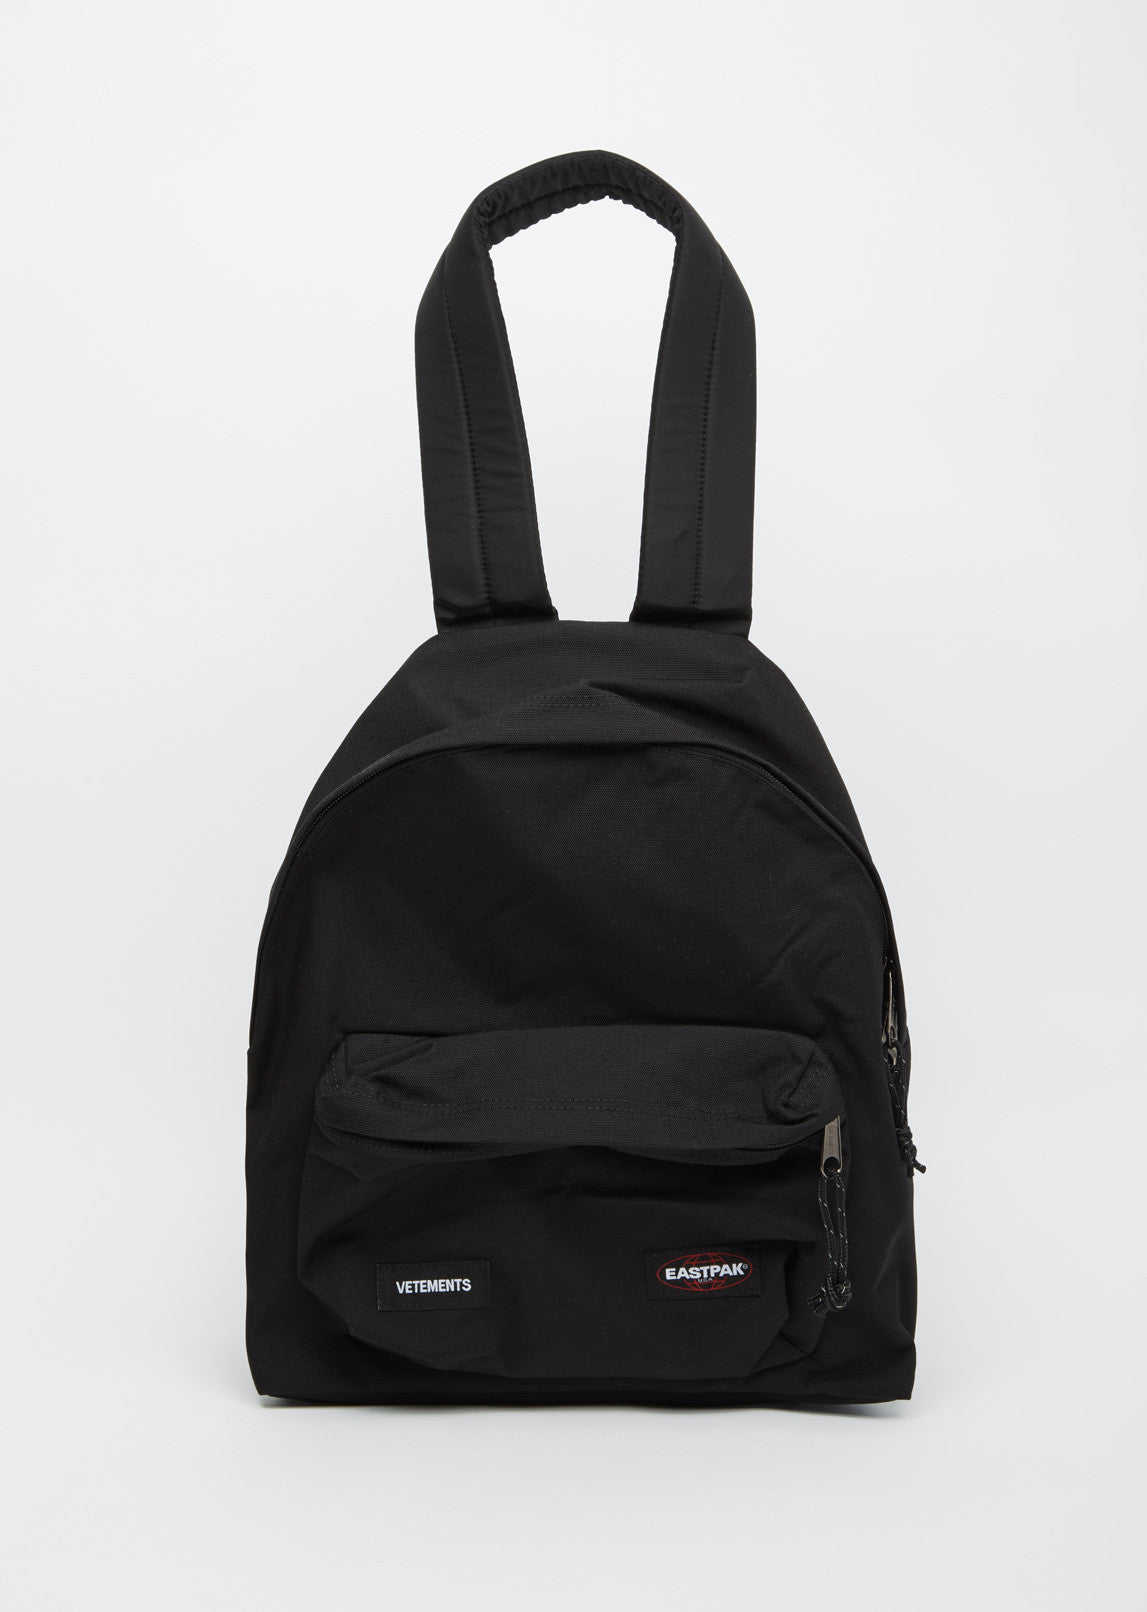 X Eastpak Backpack - One Size / Black